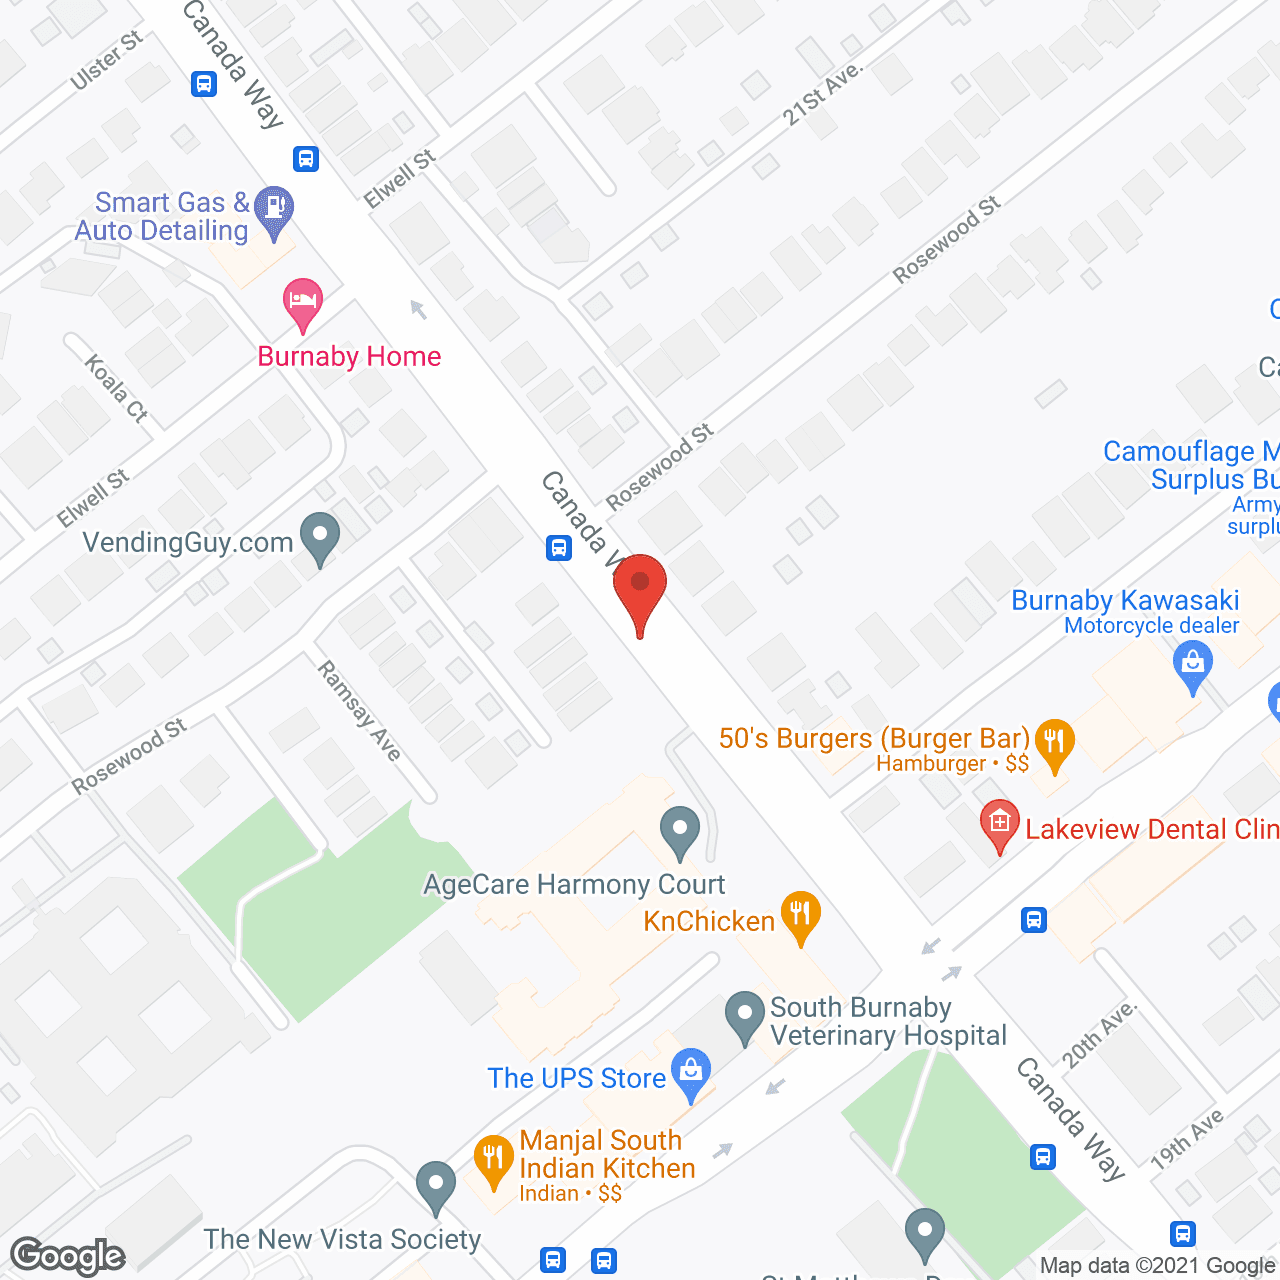 AgeCare Harmony Court Estate in google map